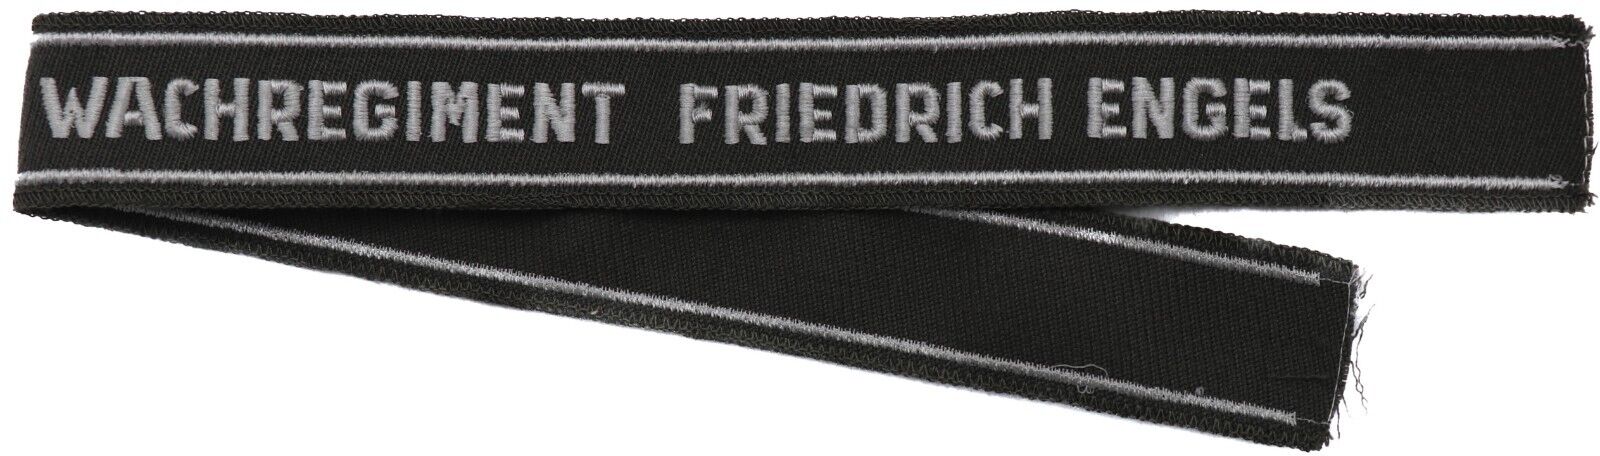 Authentic East German Wachregiment Friedrich Engels Sleeve Cuff Band NVA DDR GDR